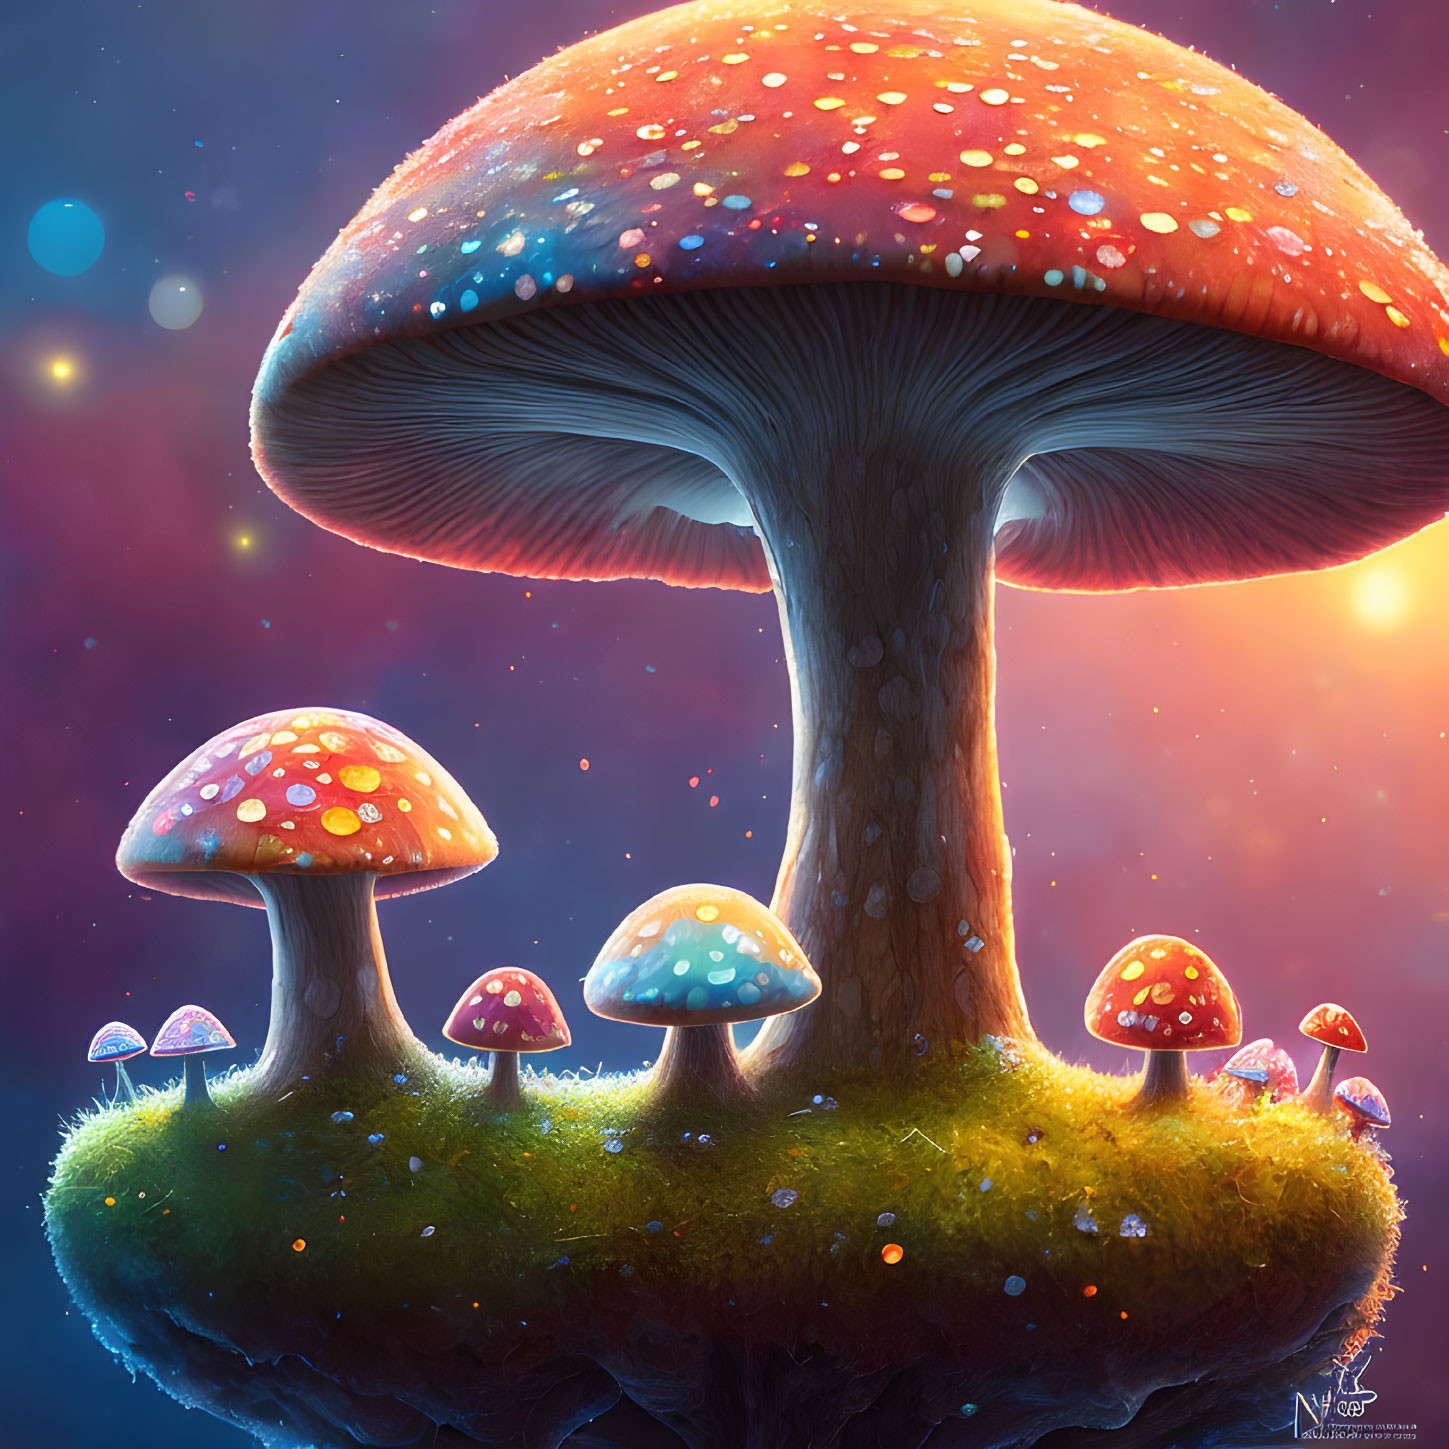 Fantasy mushrooms on floating island under celestial sky